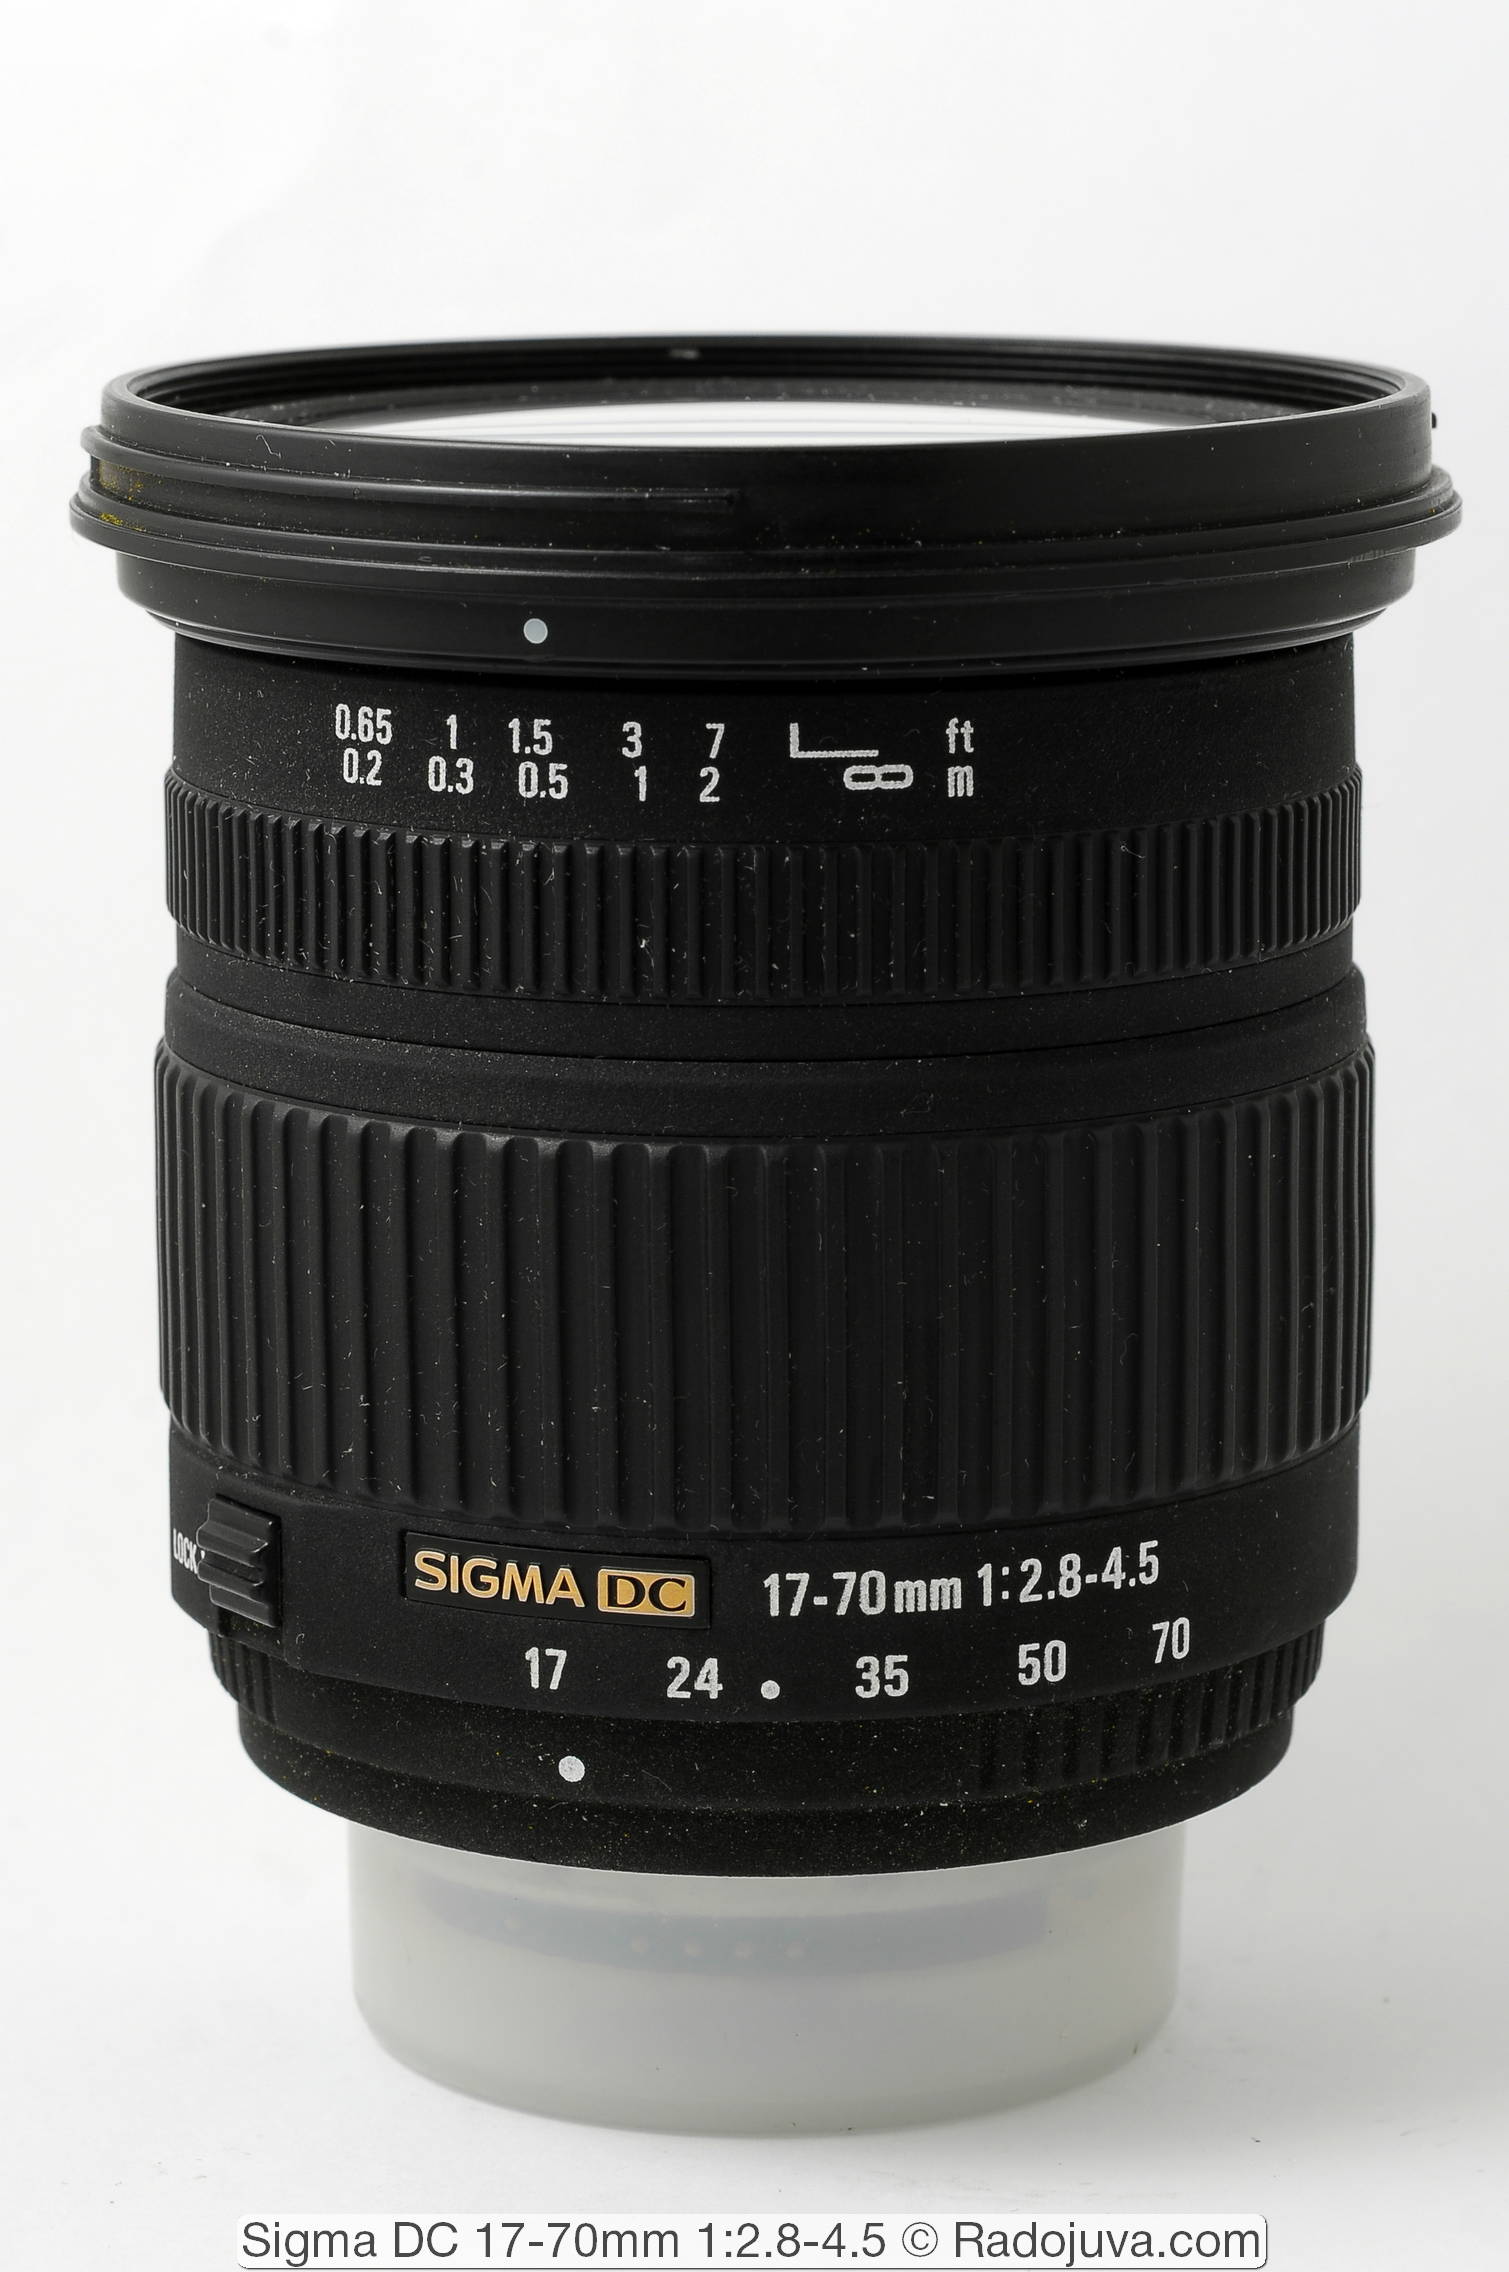 Sigma CC 17-70 mm 1:2.8-4.5